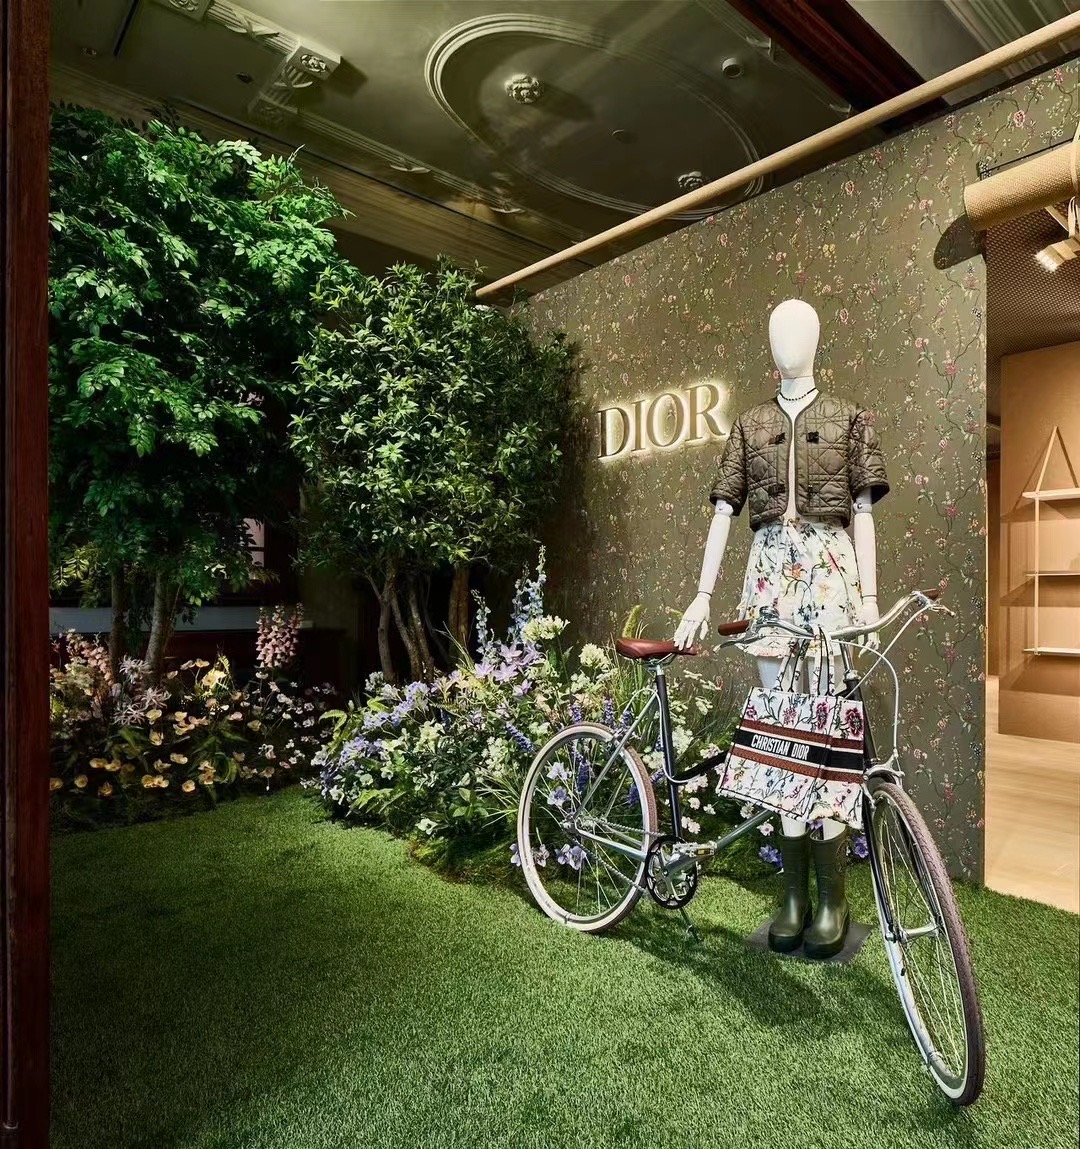 Dior SS23 Summer Pop-up Mar 2 – Apr 2023 Chengdu Shanghai